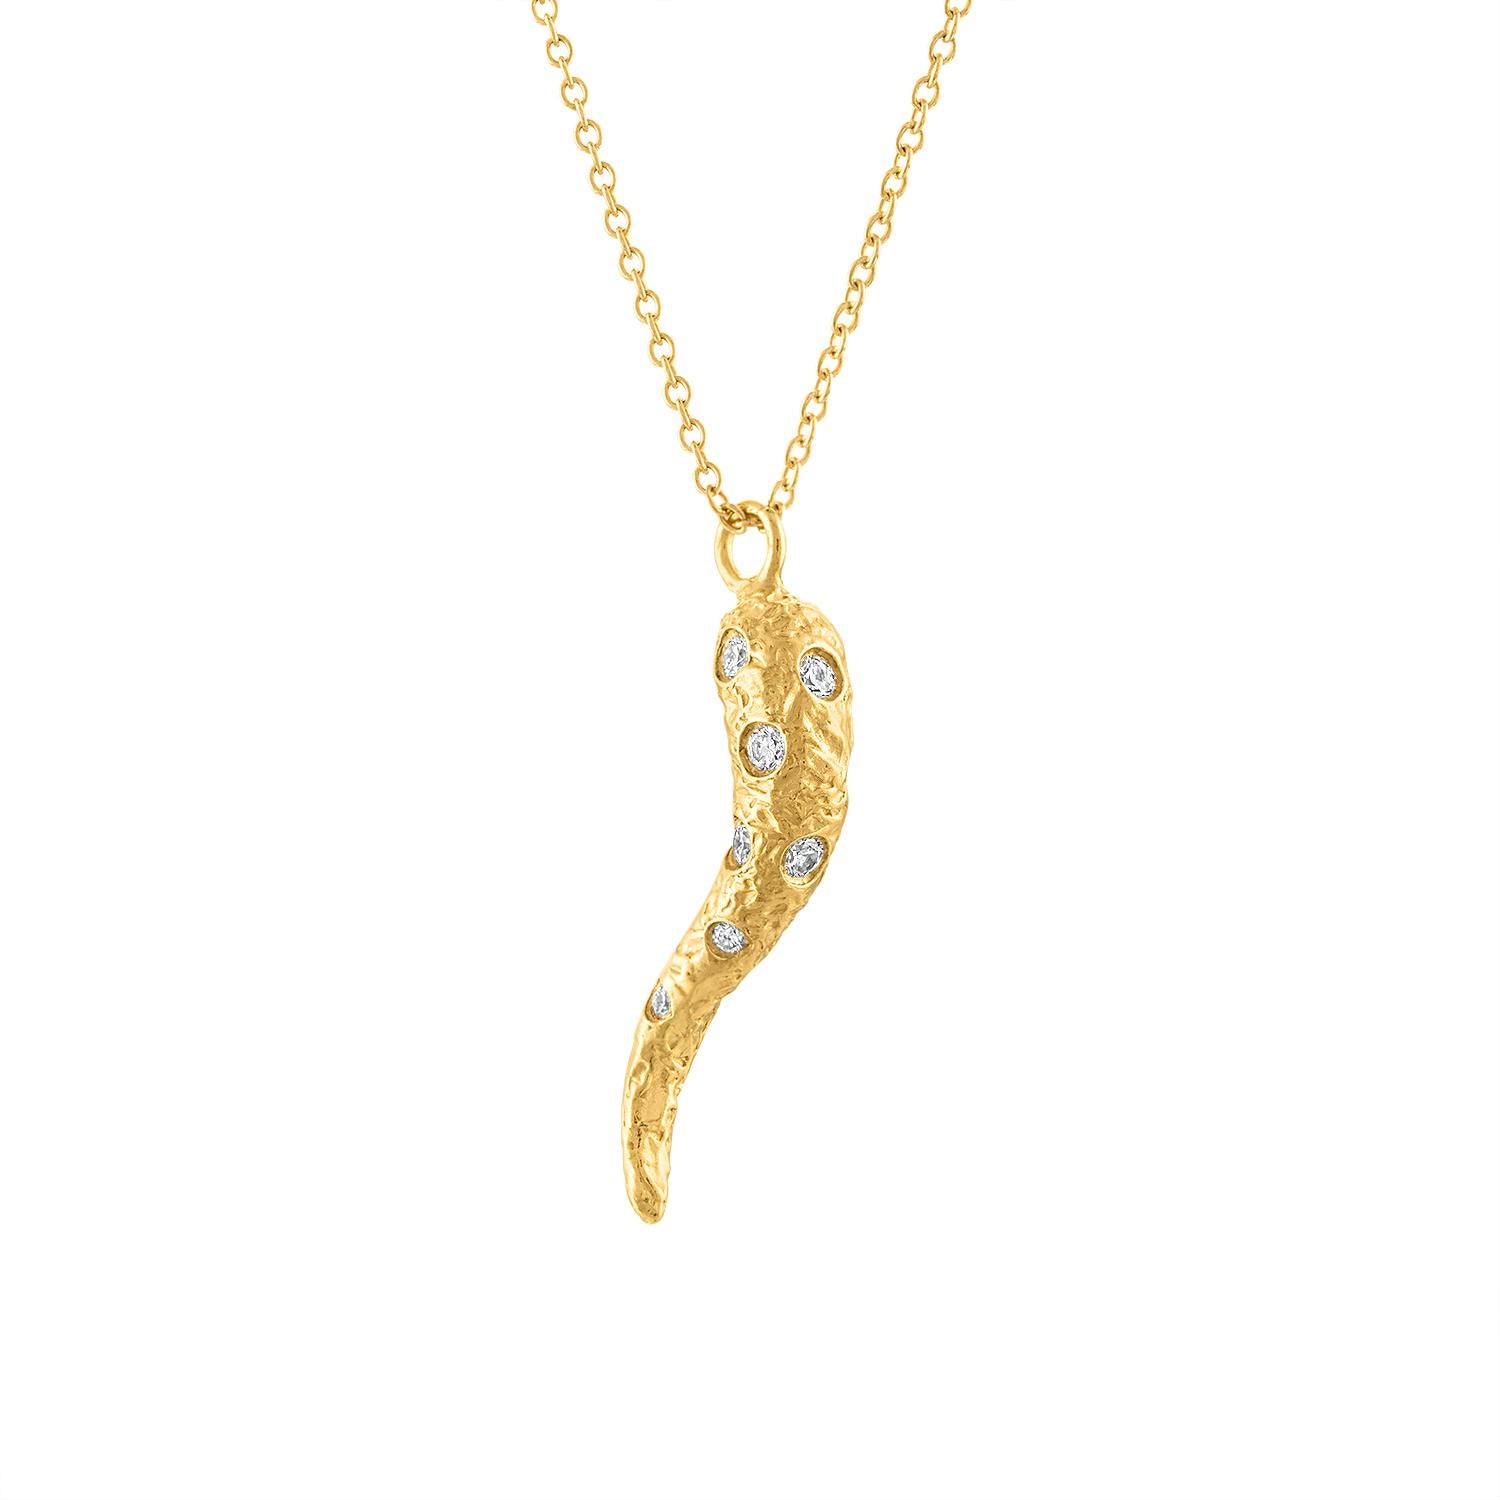 cornicello necklace gold